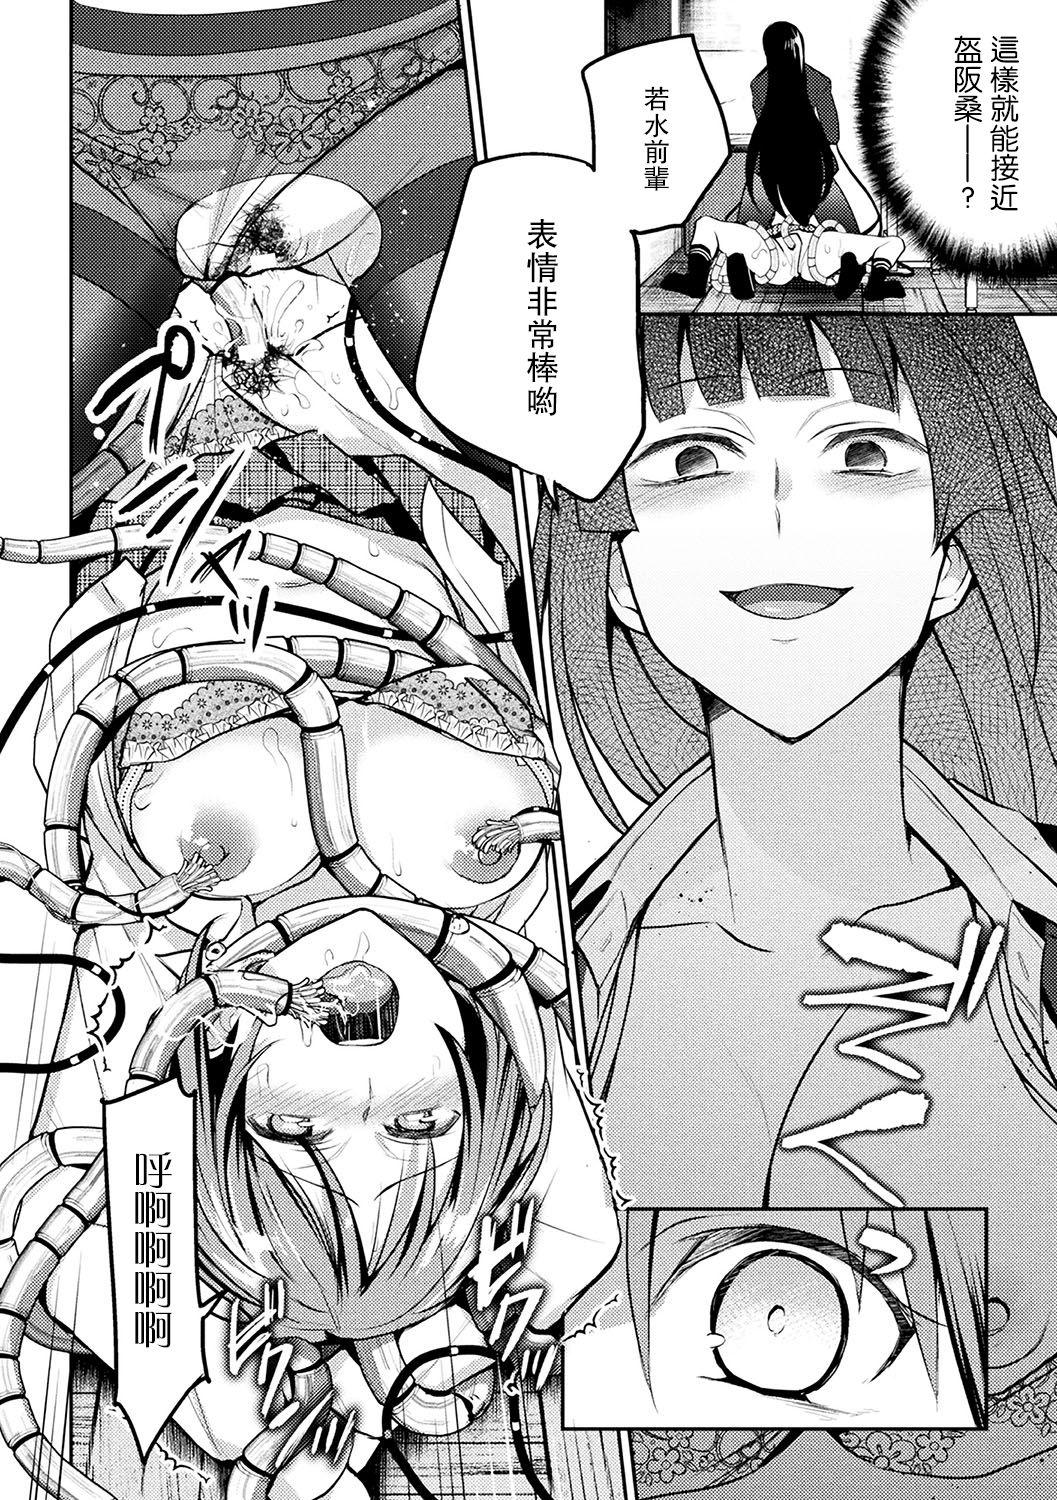 Kaibutsu no Hitomi - Monster's pupil 14